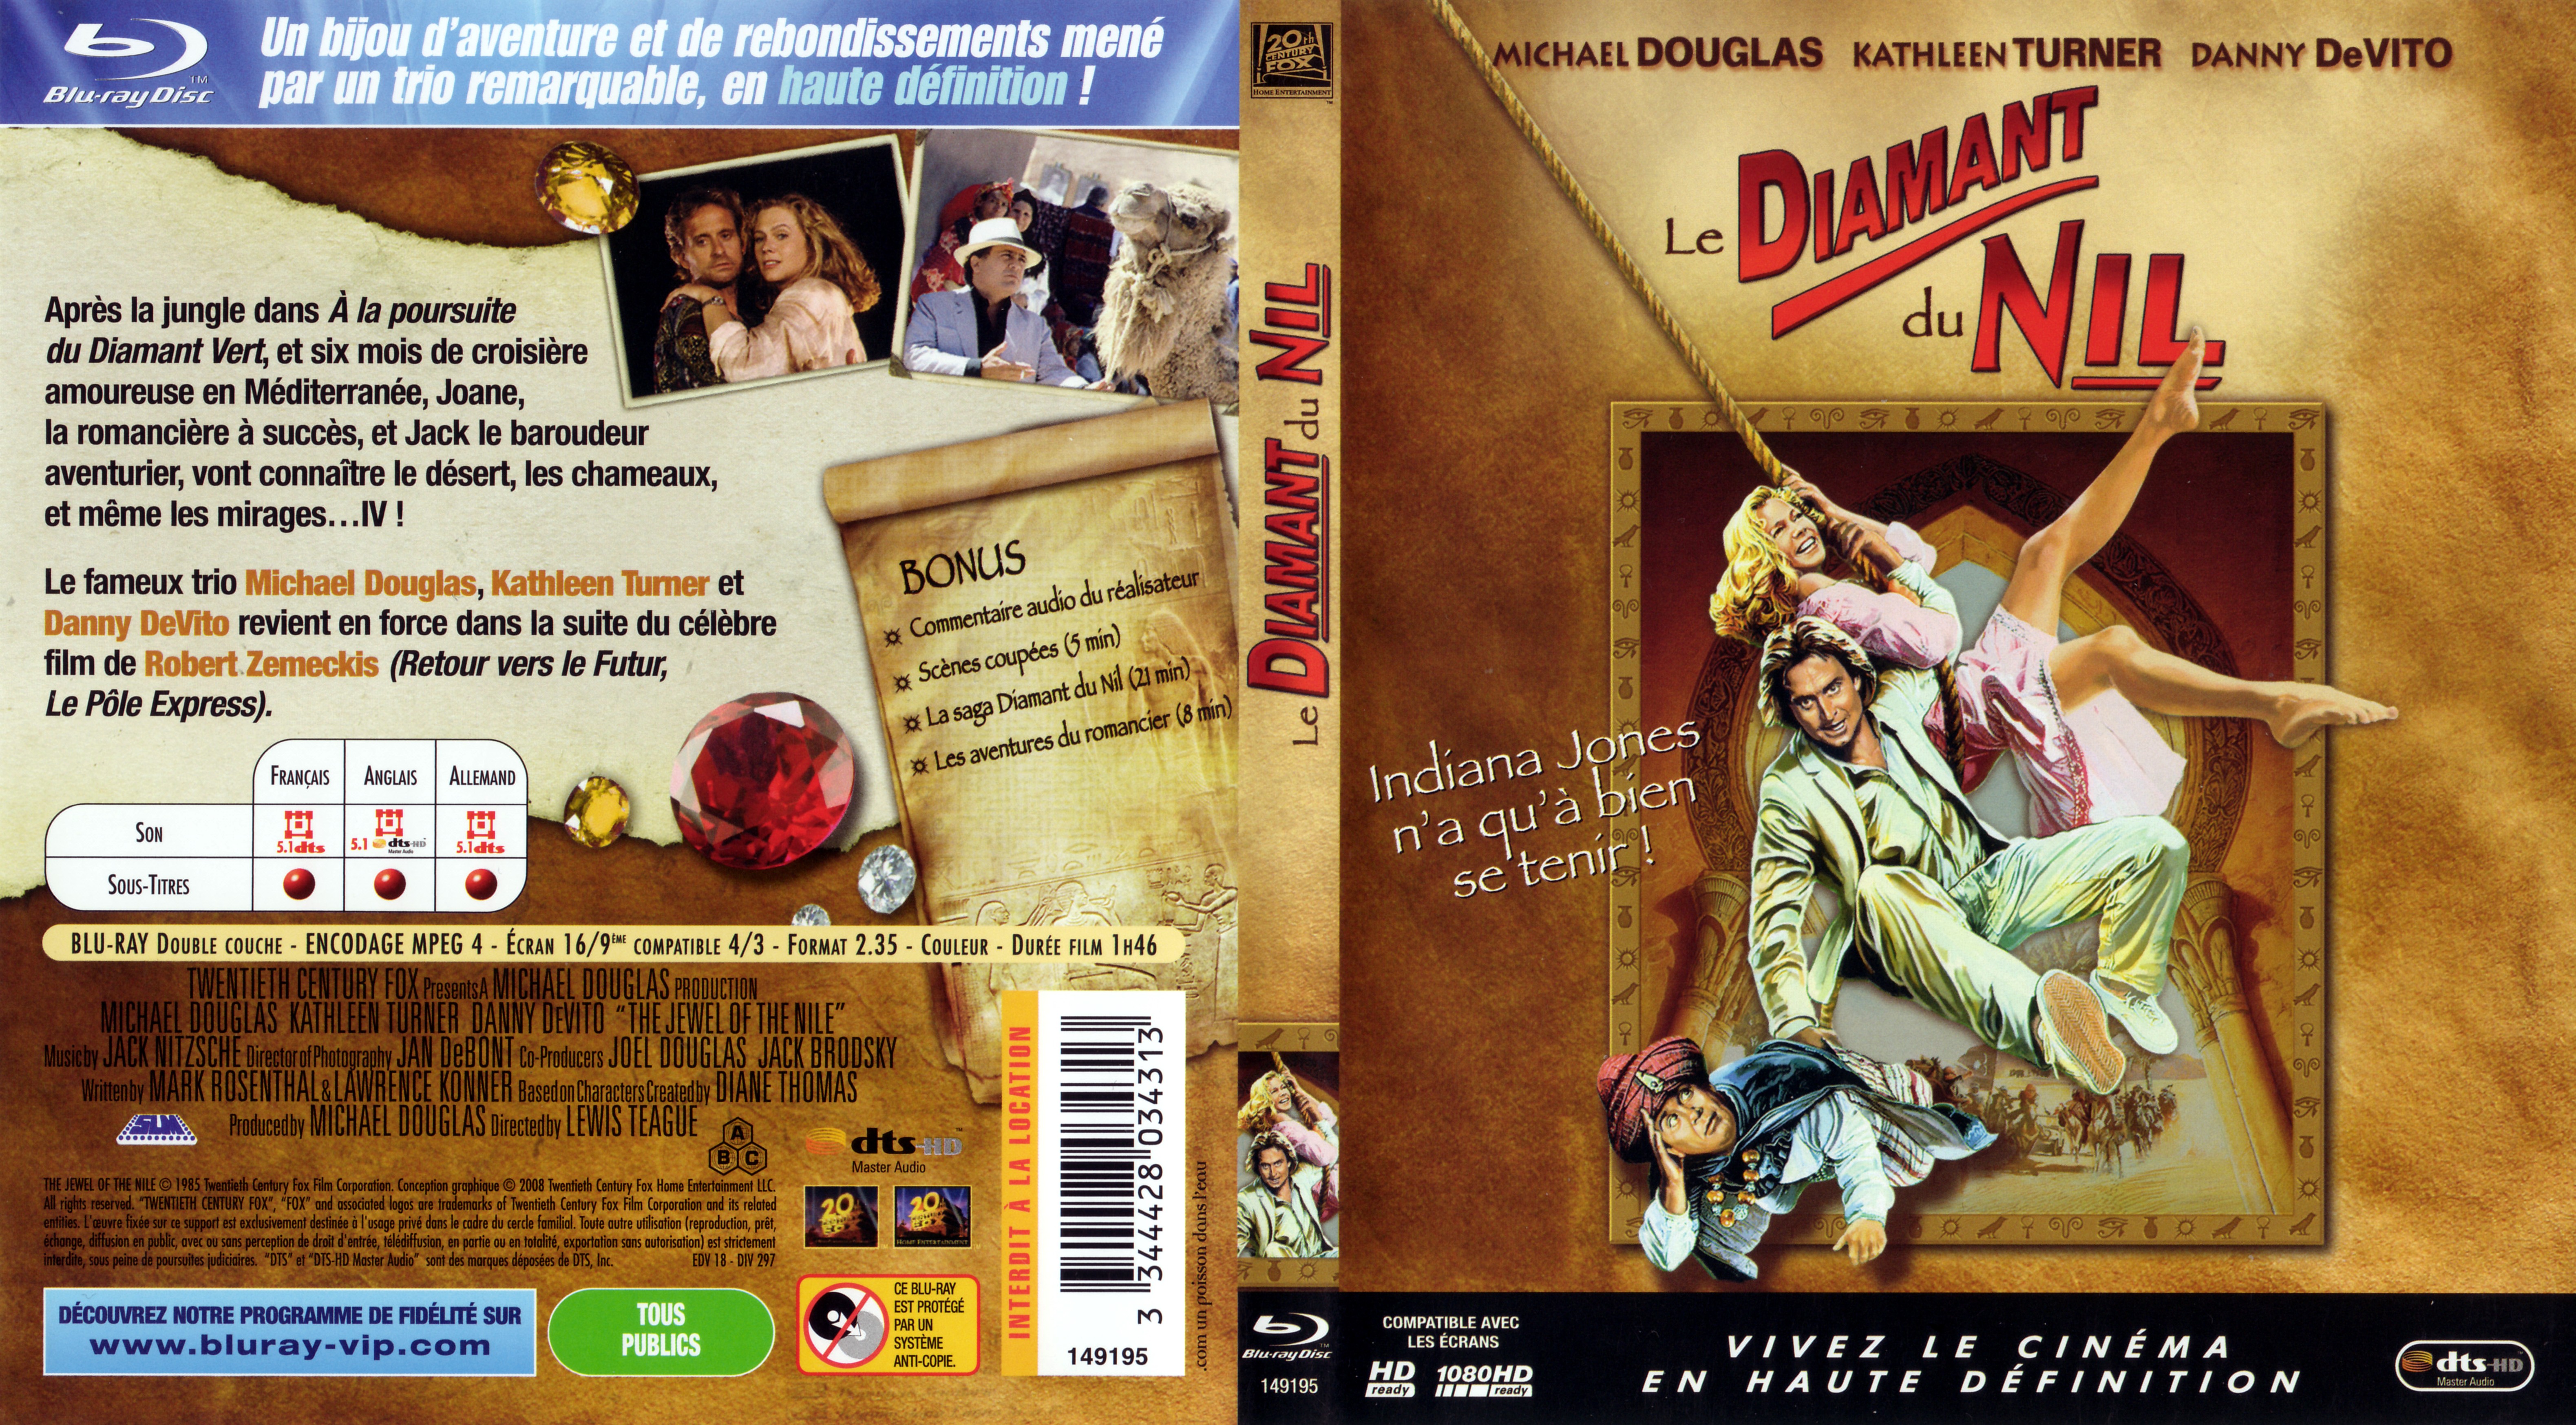 Jaquette DVD Le diamant du Nil (BLU-RAY)